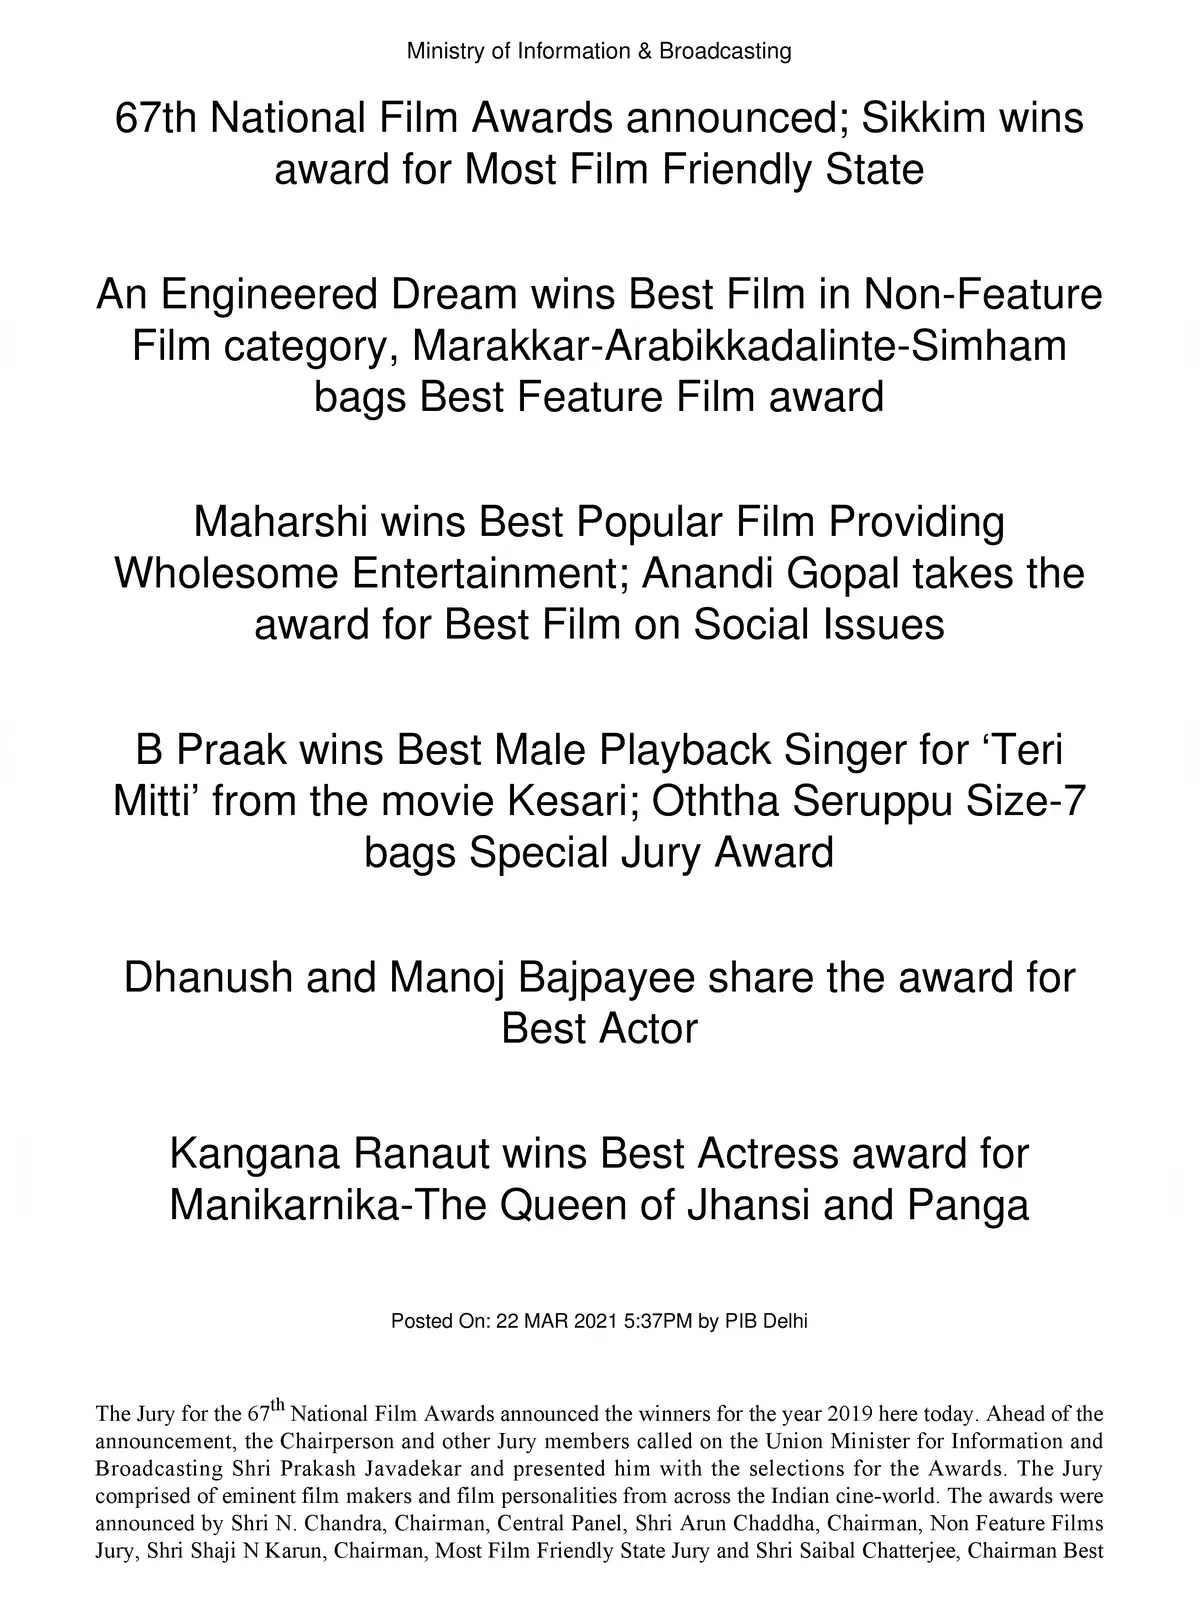 67th National Film Awards Winners List